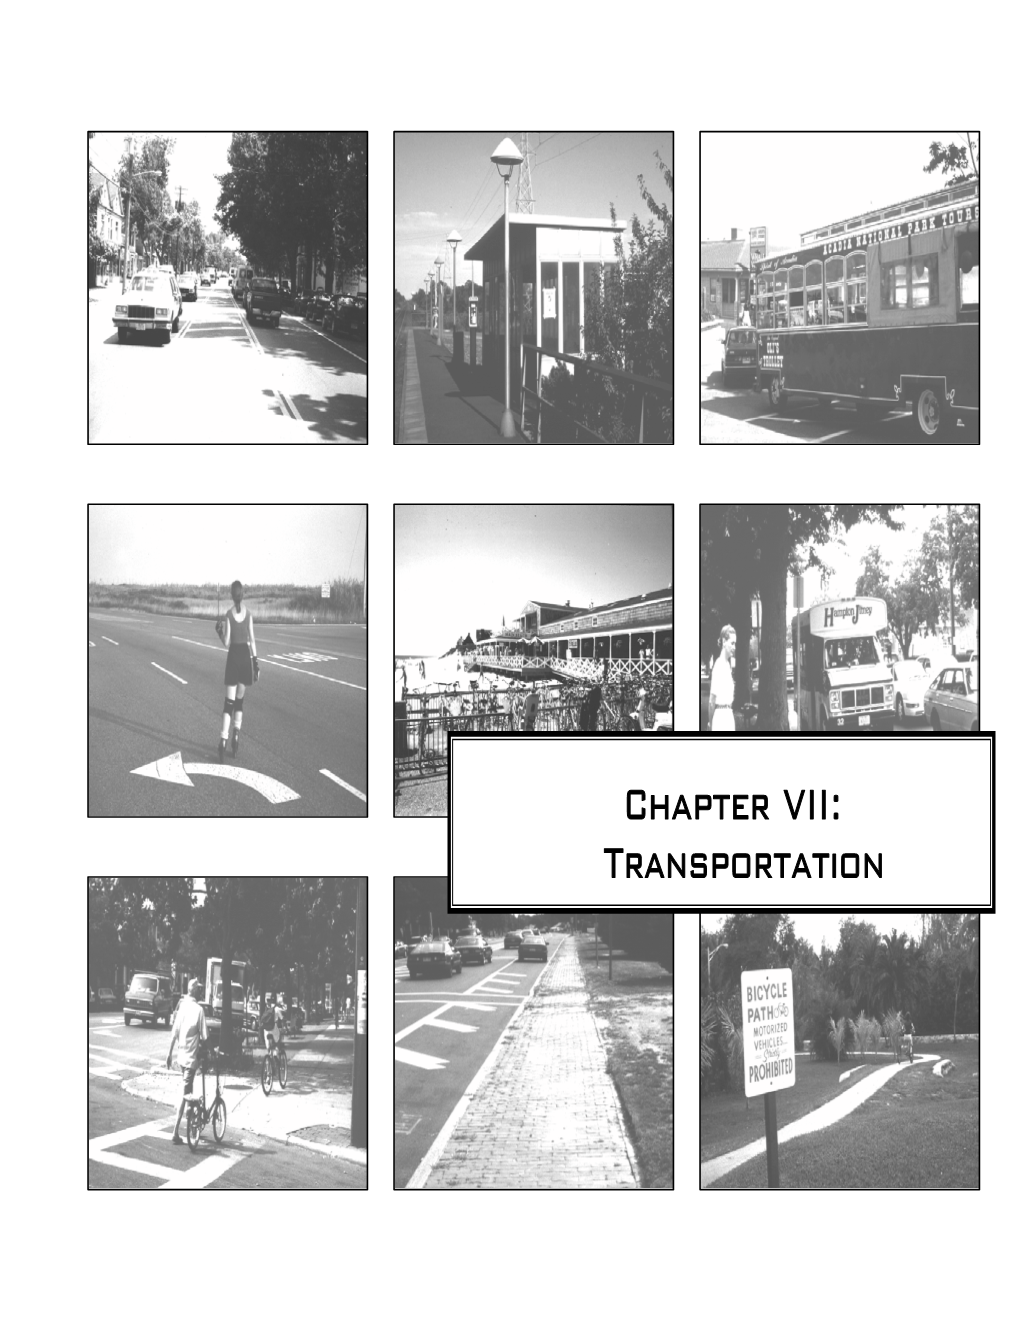 Chapter VII: Transportation 356 Transportation - March, 1999 Plan and Implementation the VISION for TRANSPORTATION